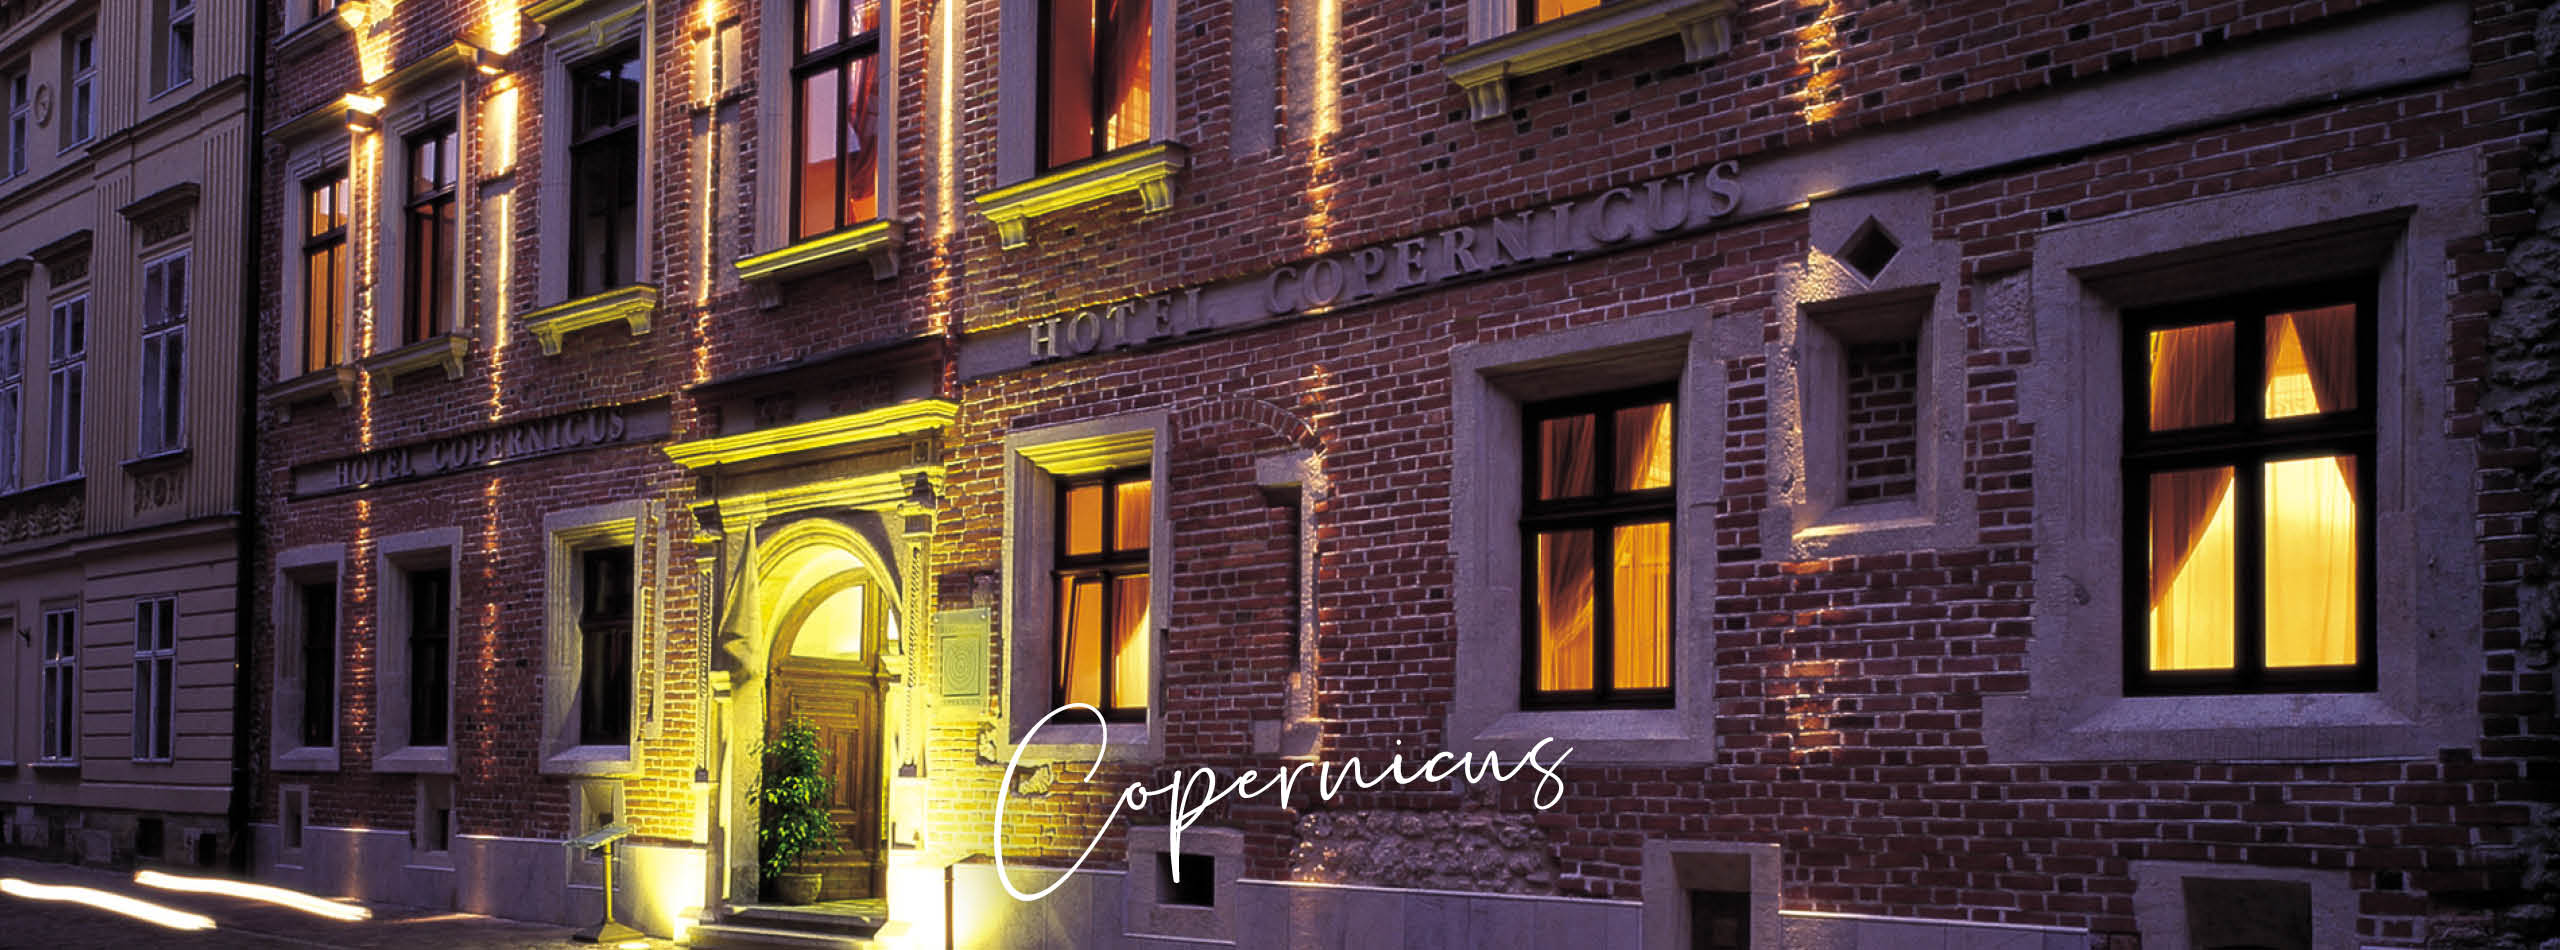 Hotel Copernicus Old Town Kraków Poland